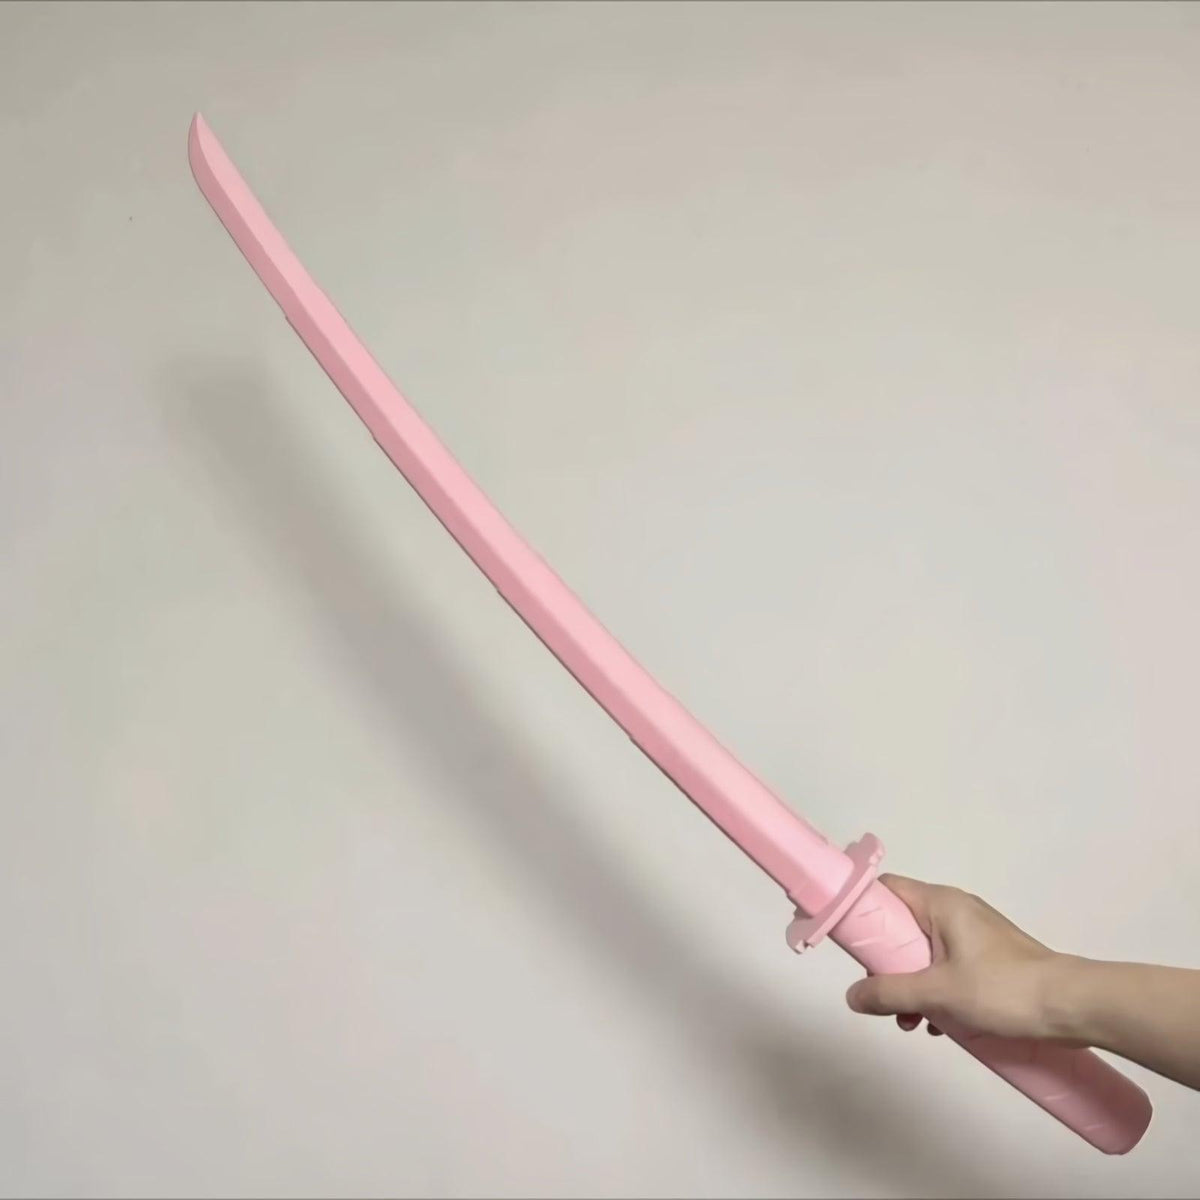 Extendable KATANA Samurai Sword 3D Gravity Knife Fidget Toy - PANSEKtoy